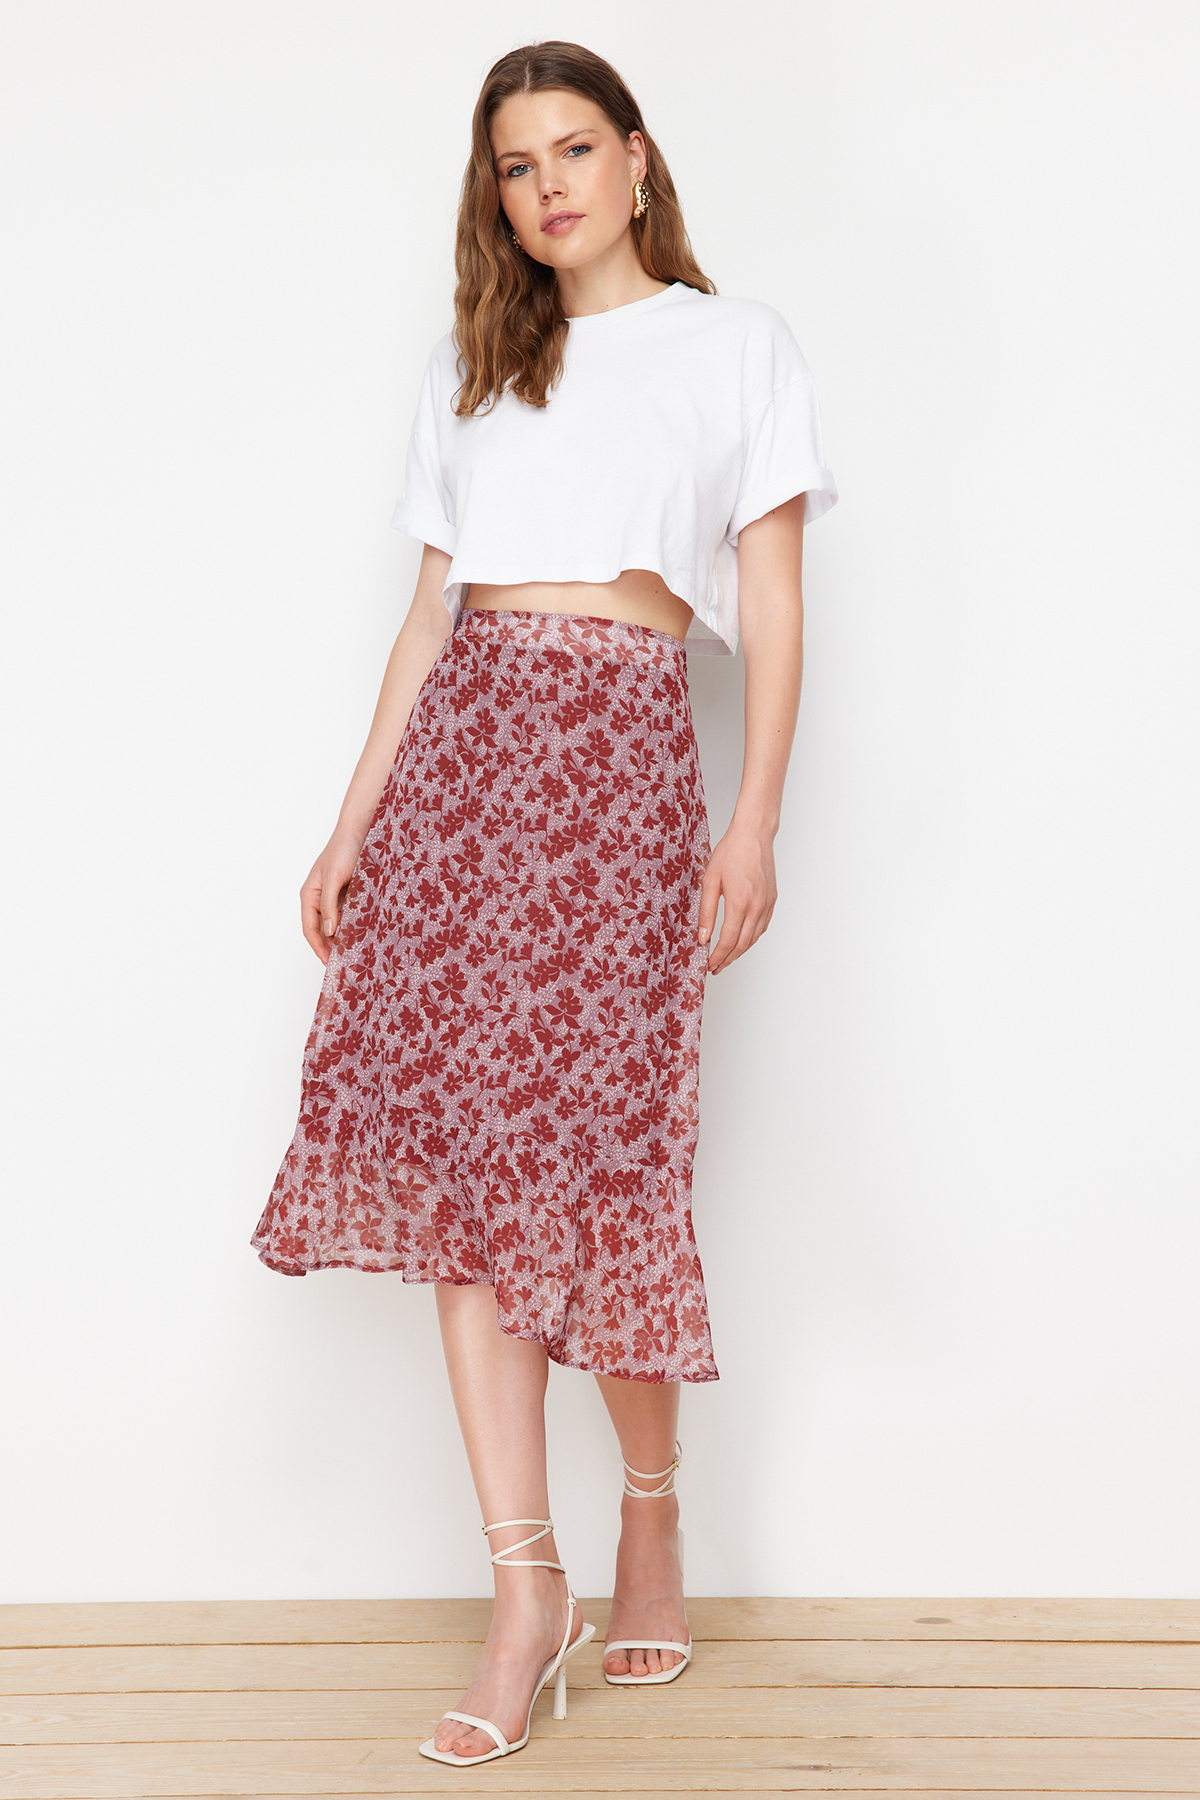 Trendyol Brown Skirt Ruffled Chiffon Fabric Patterned Midi Woven Skirt